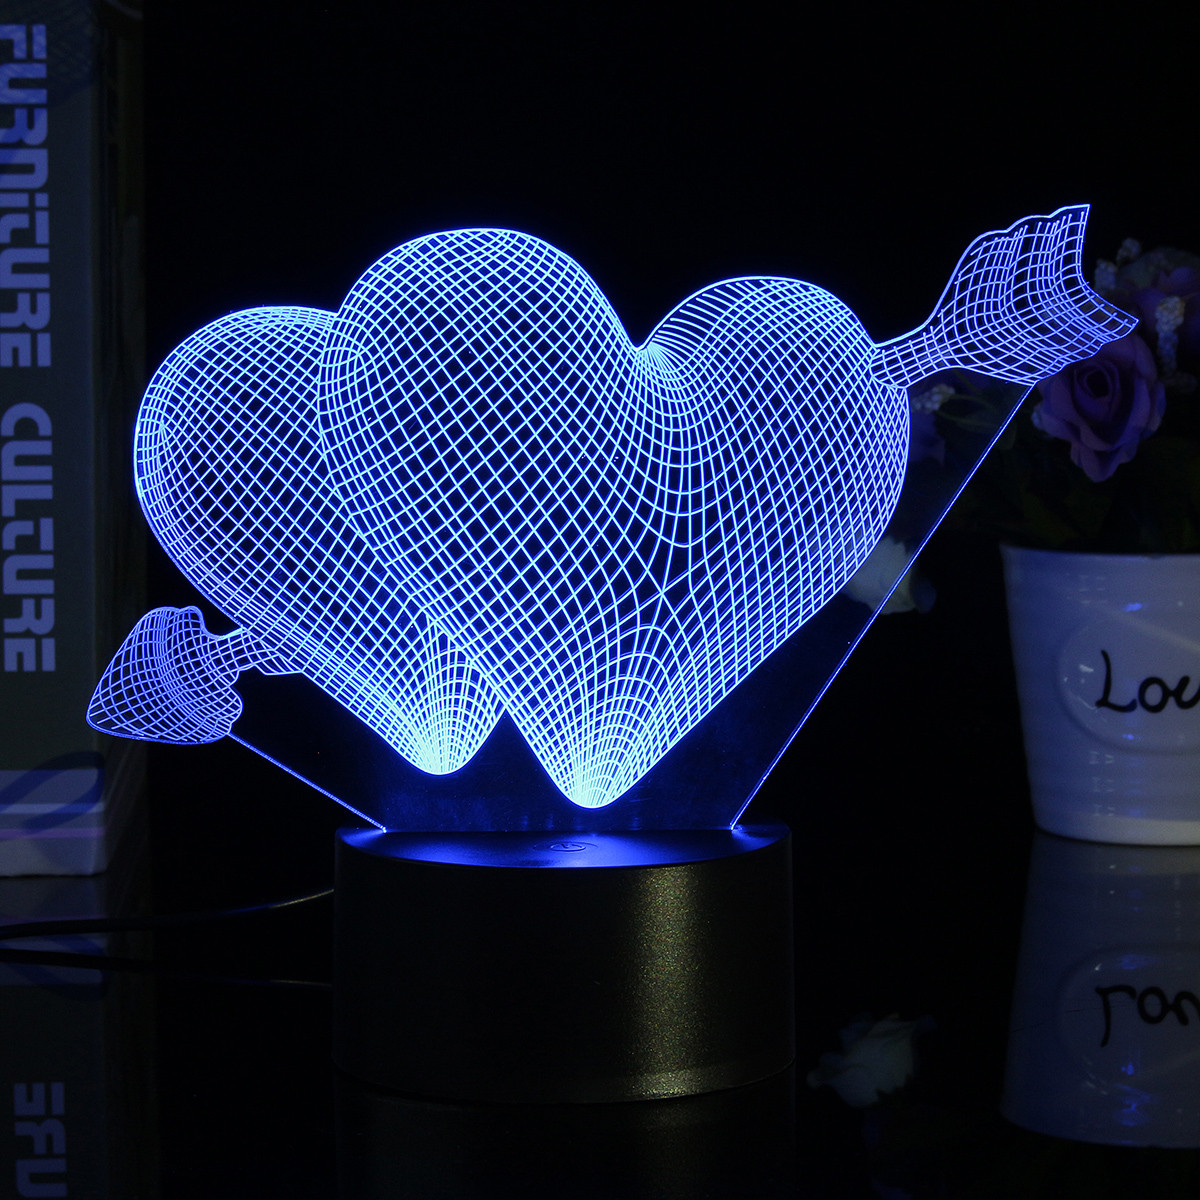 Love-Arrow-3D-Desk-Table-Lamp-7-Color-Change-LED-Night-Light-Party-Decor-Gift-1106455-4